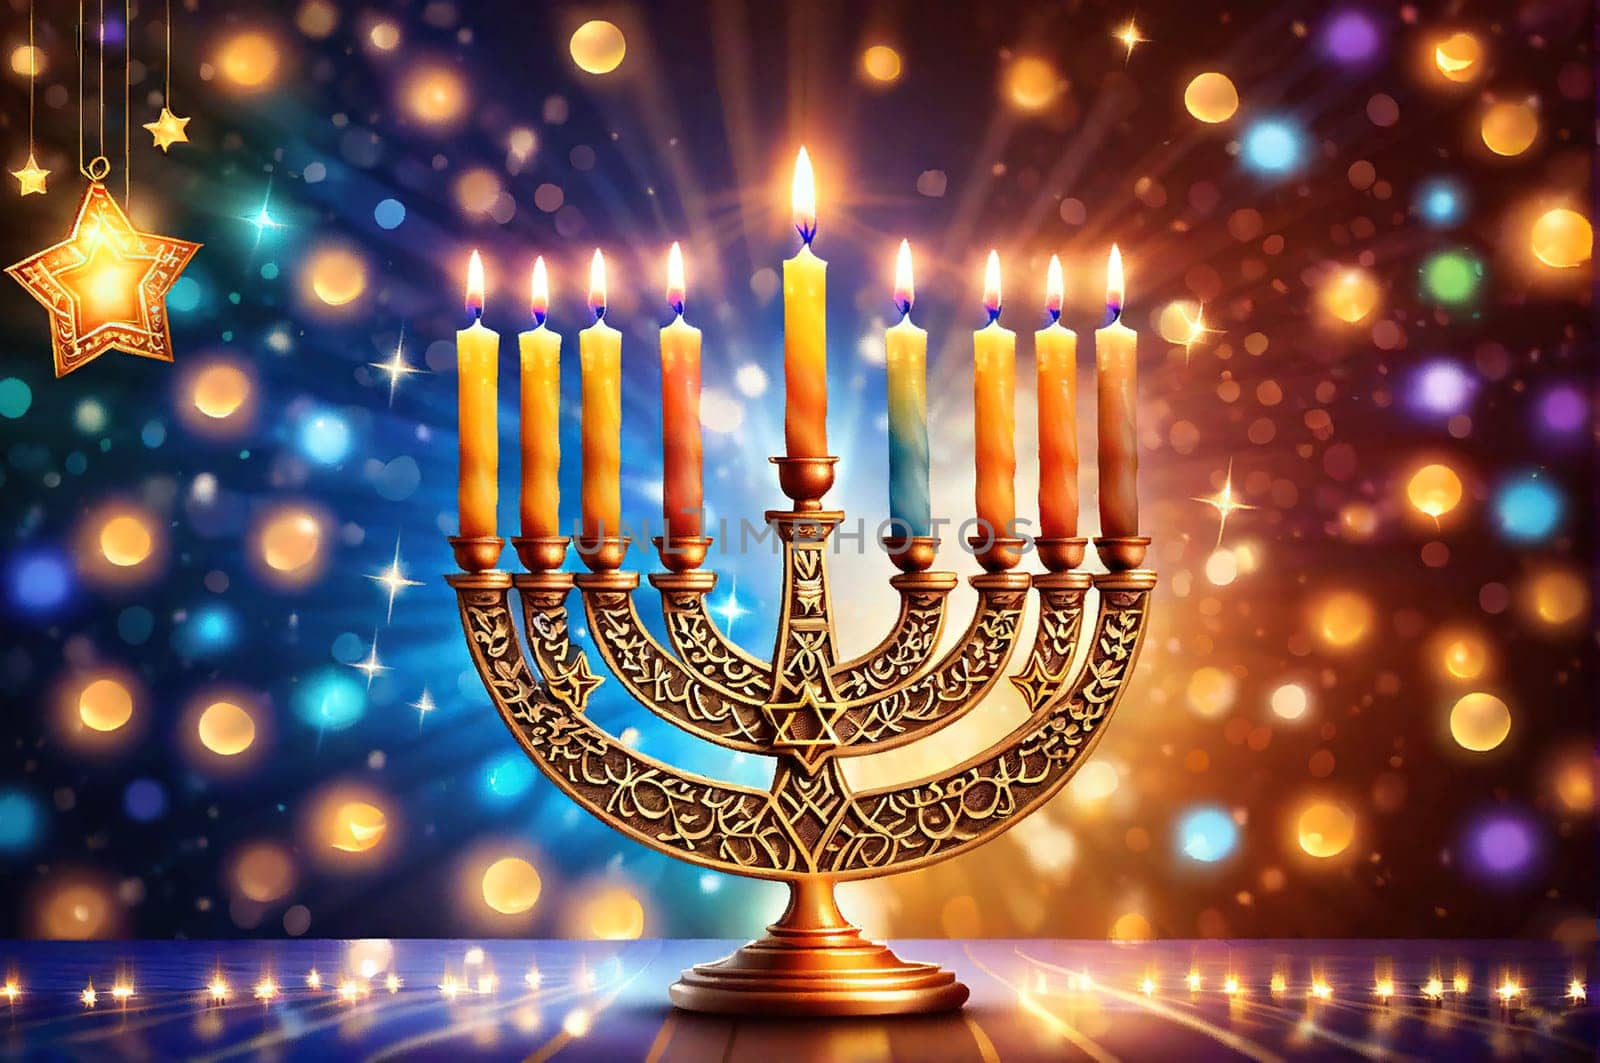 Bronze Hanukkah menorah with burning candles on table. Holiday greeting card by EkaterinaPereslavtseva